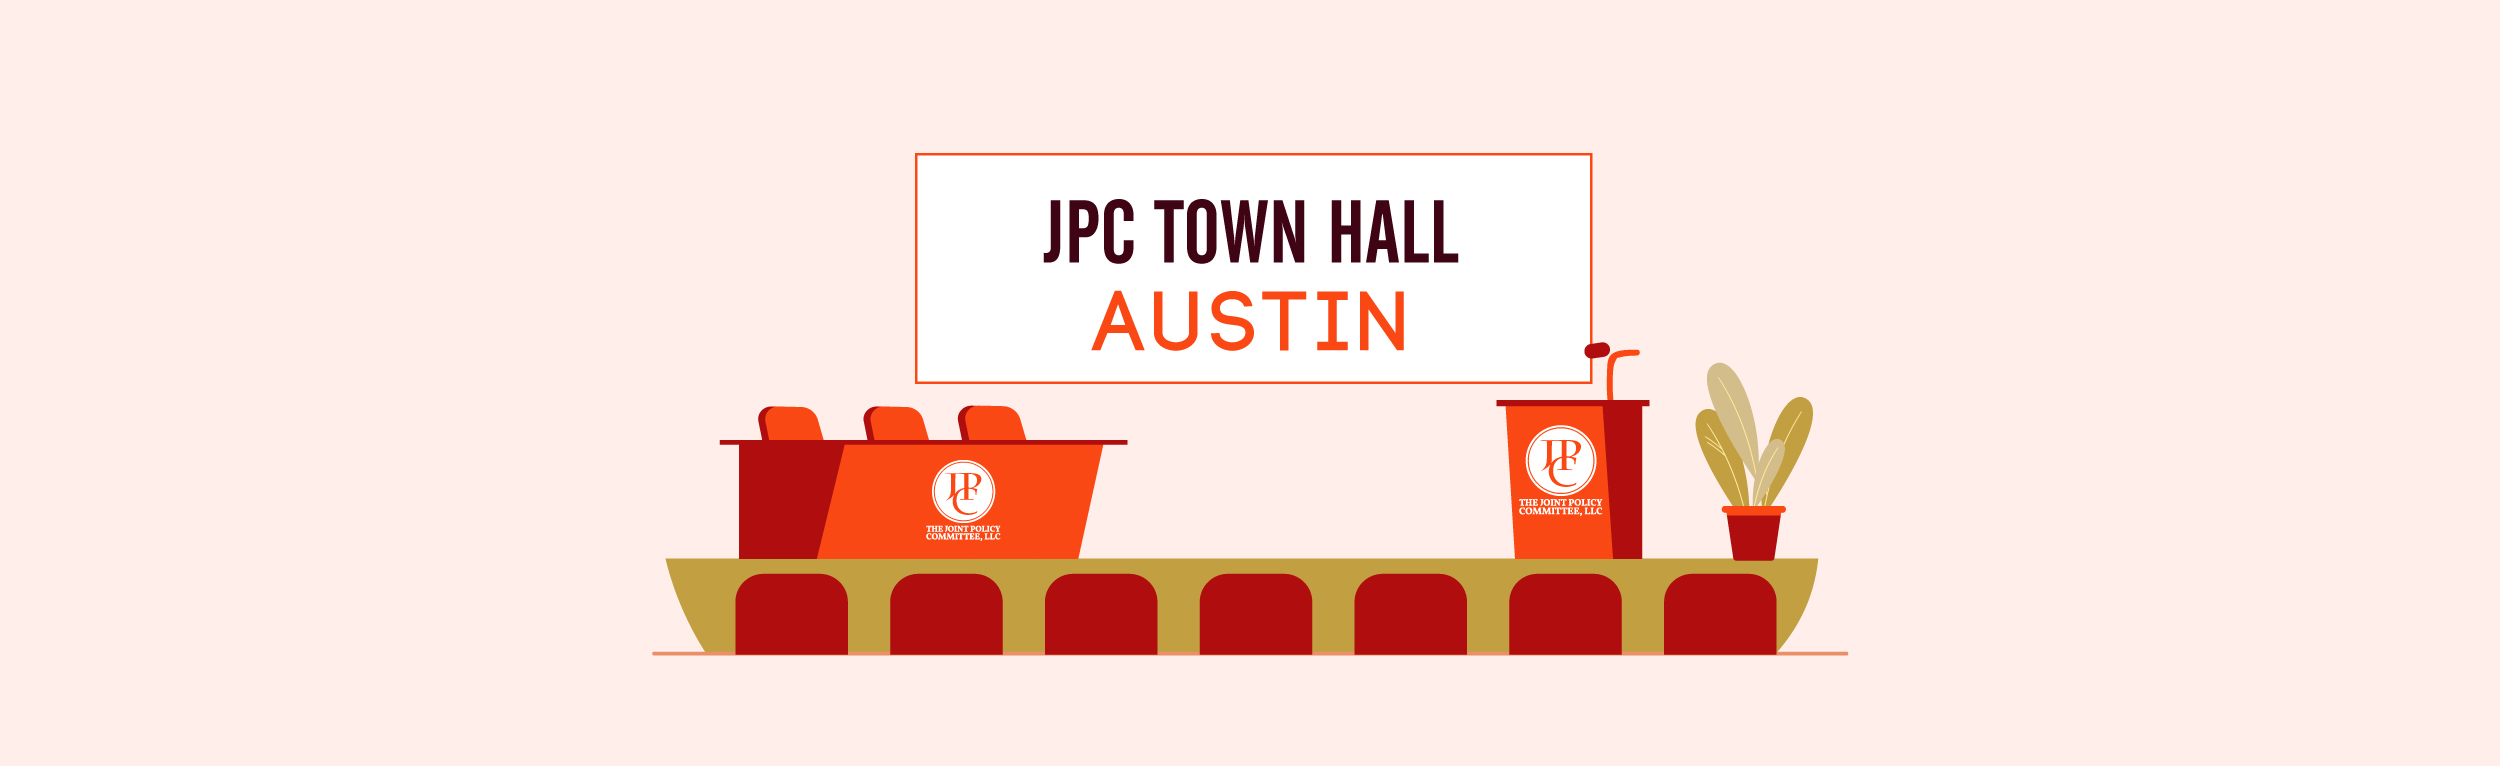 JPC Town Hall Austin